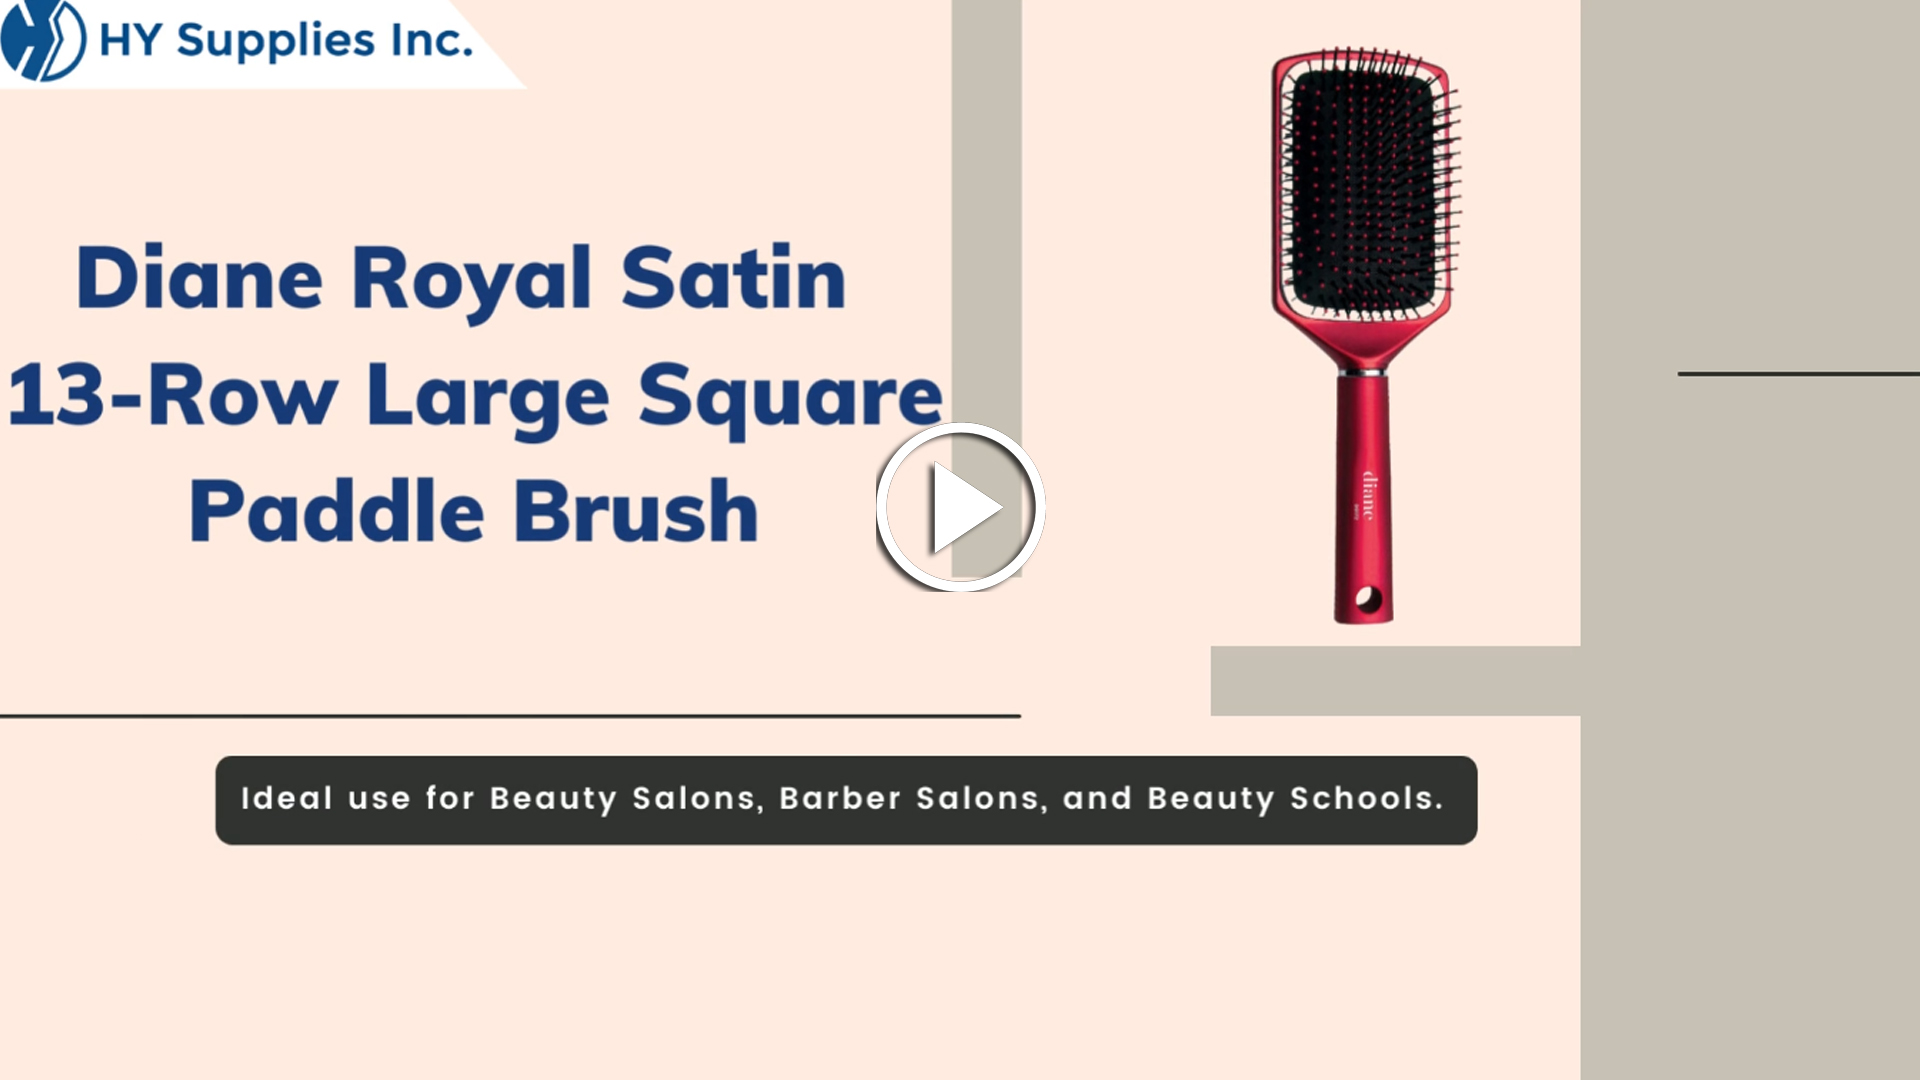 Diane Royal Satin 13-Row Large Square Paddle Brush